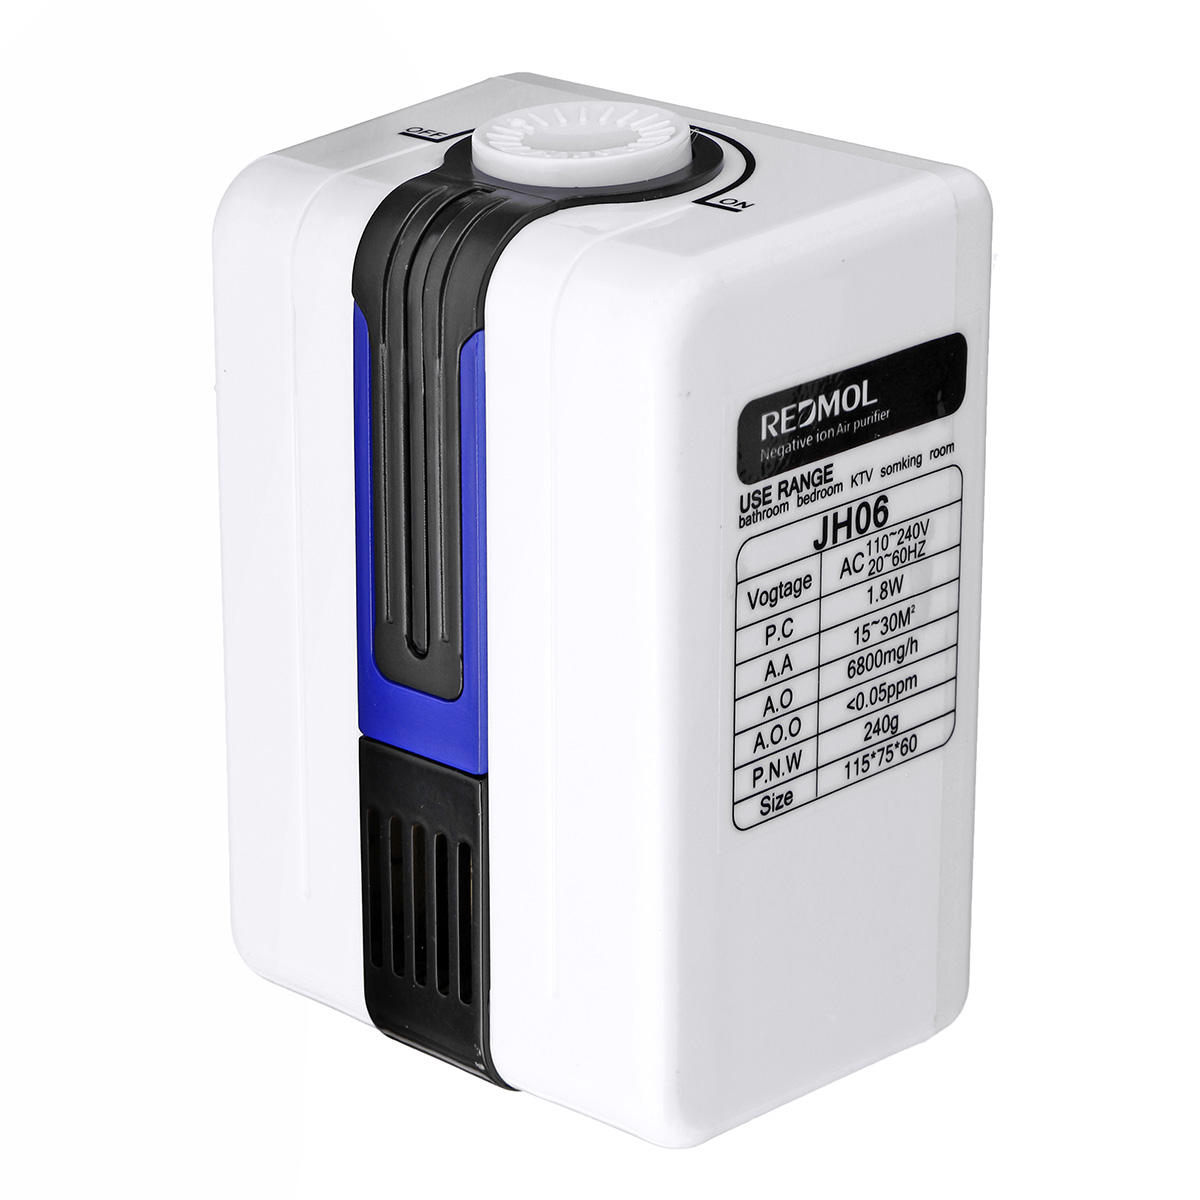 LED Purificador de aire Limpiador de ionizador de ozono Fresh Clean Air Purif